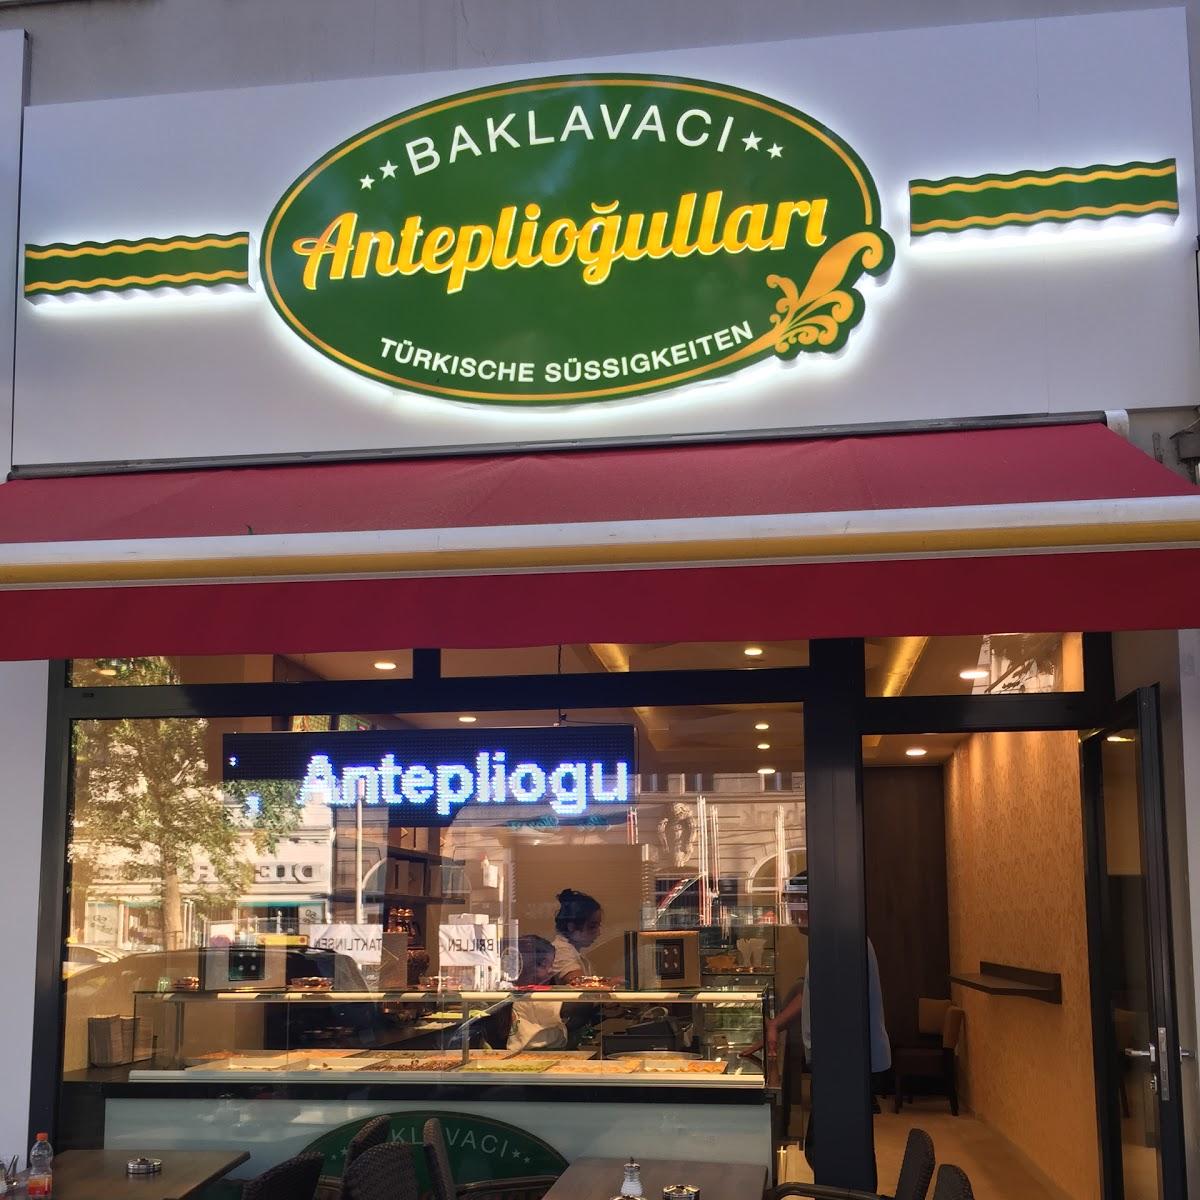 Restaurant "Baklavaci Antepliogullari" in Berlin